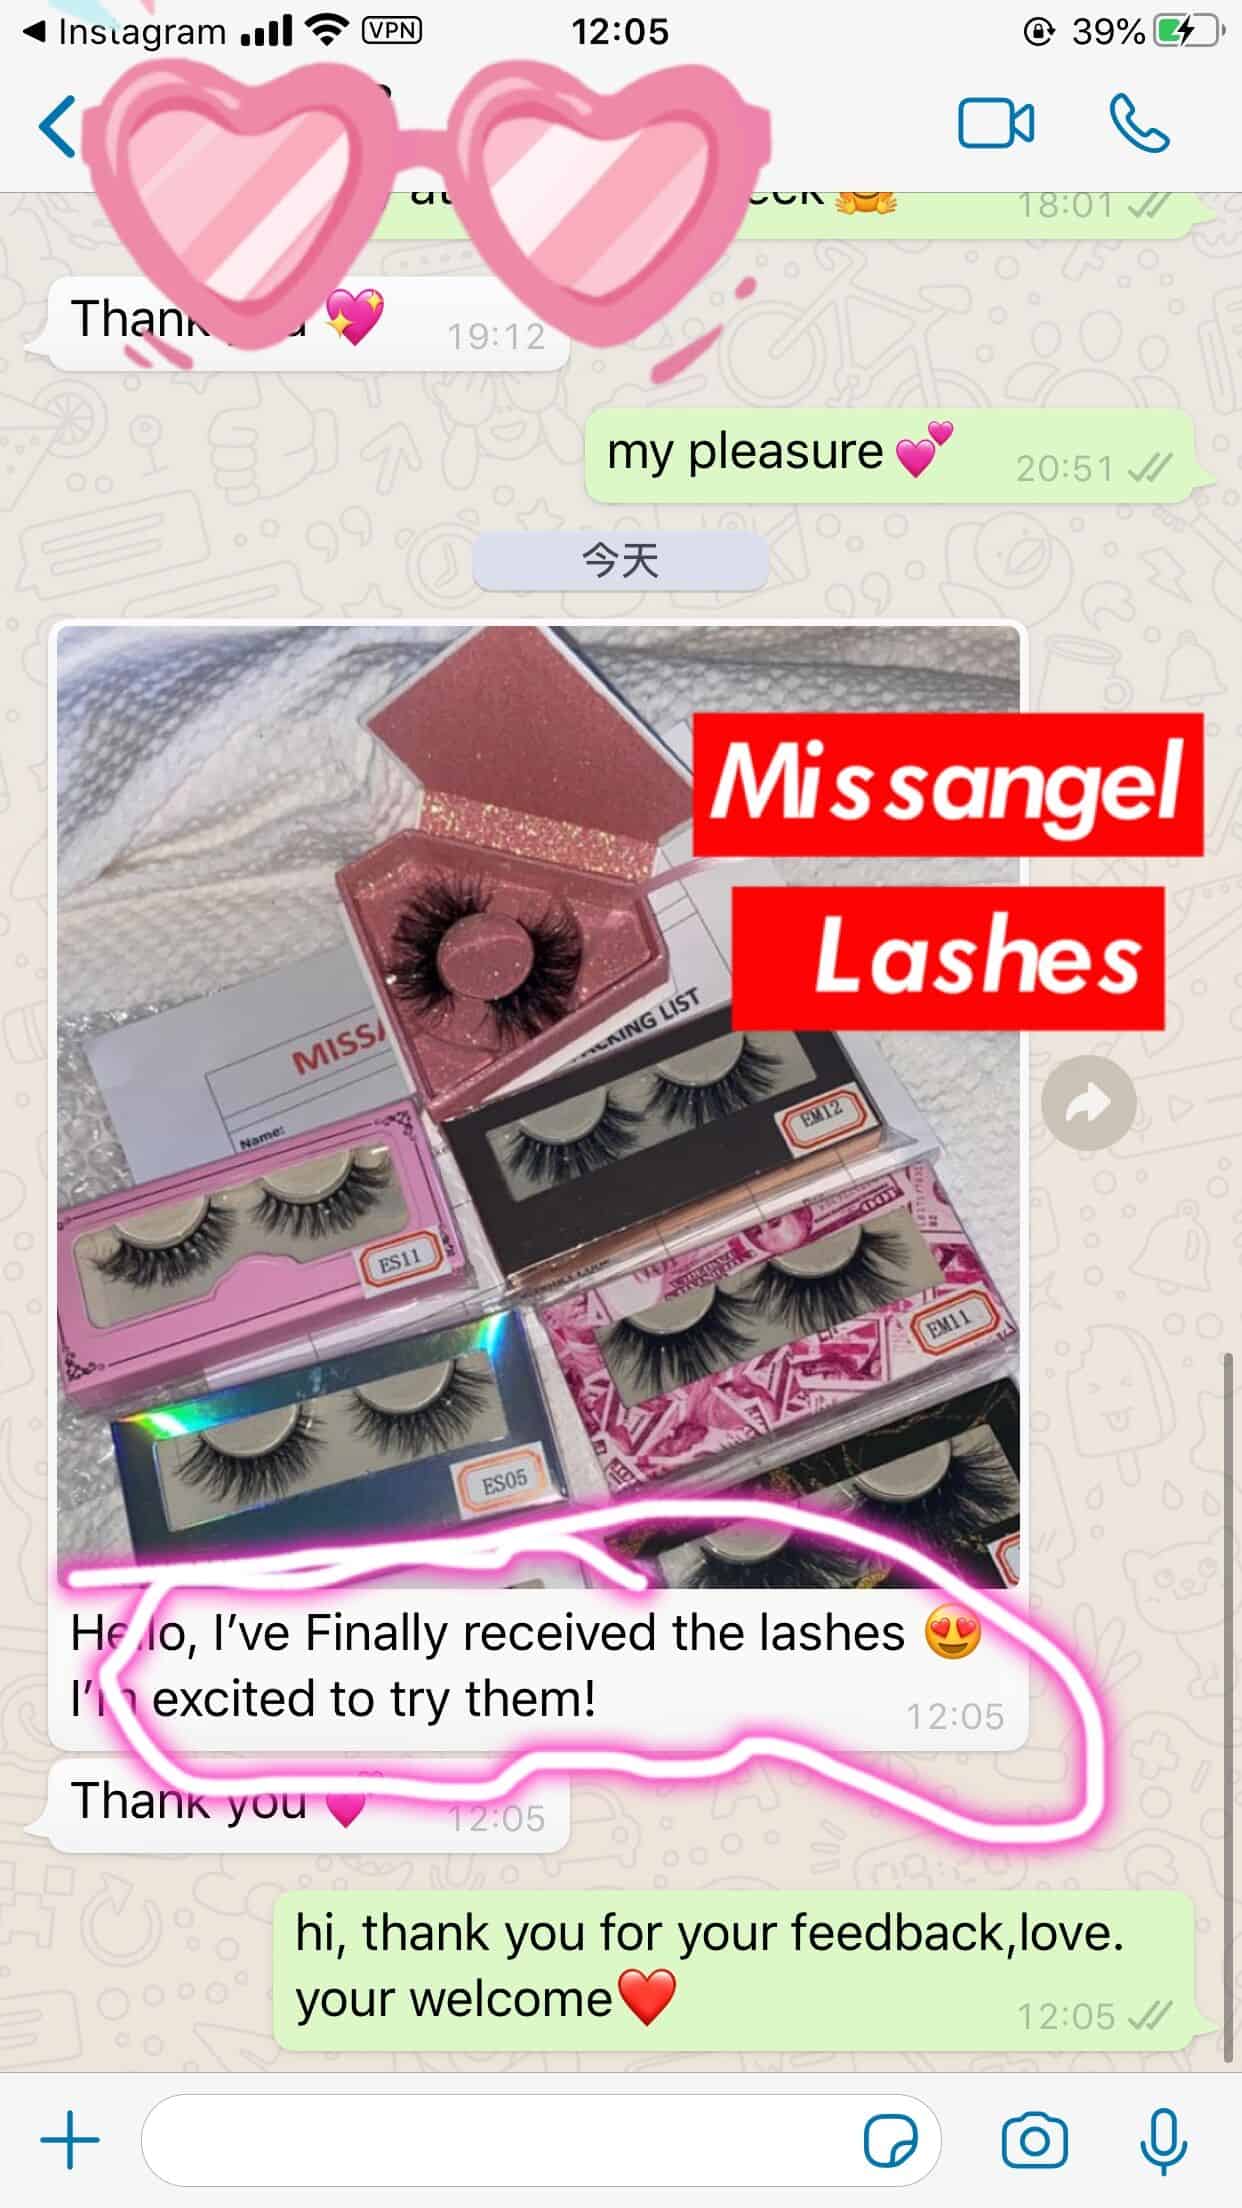 mink eyelashes and packaging wholesale vendors